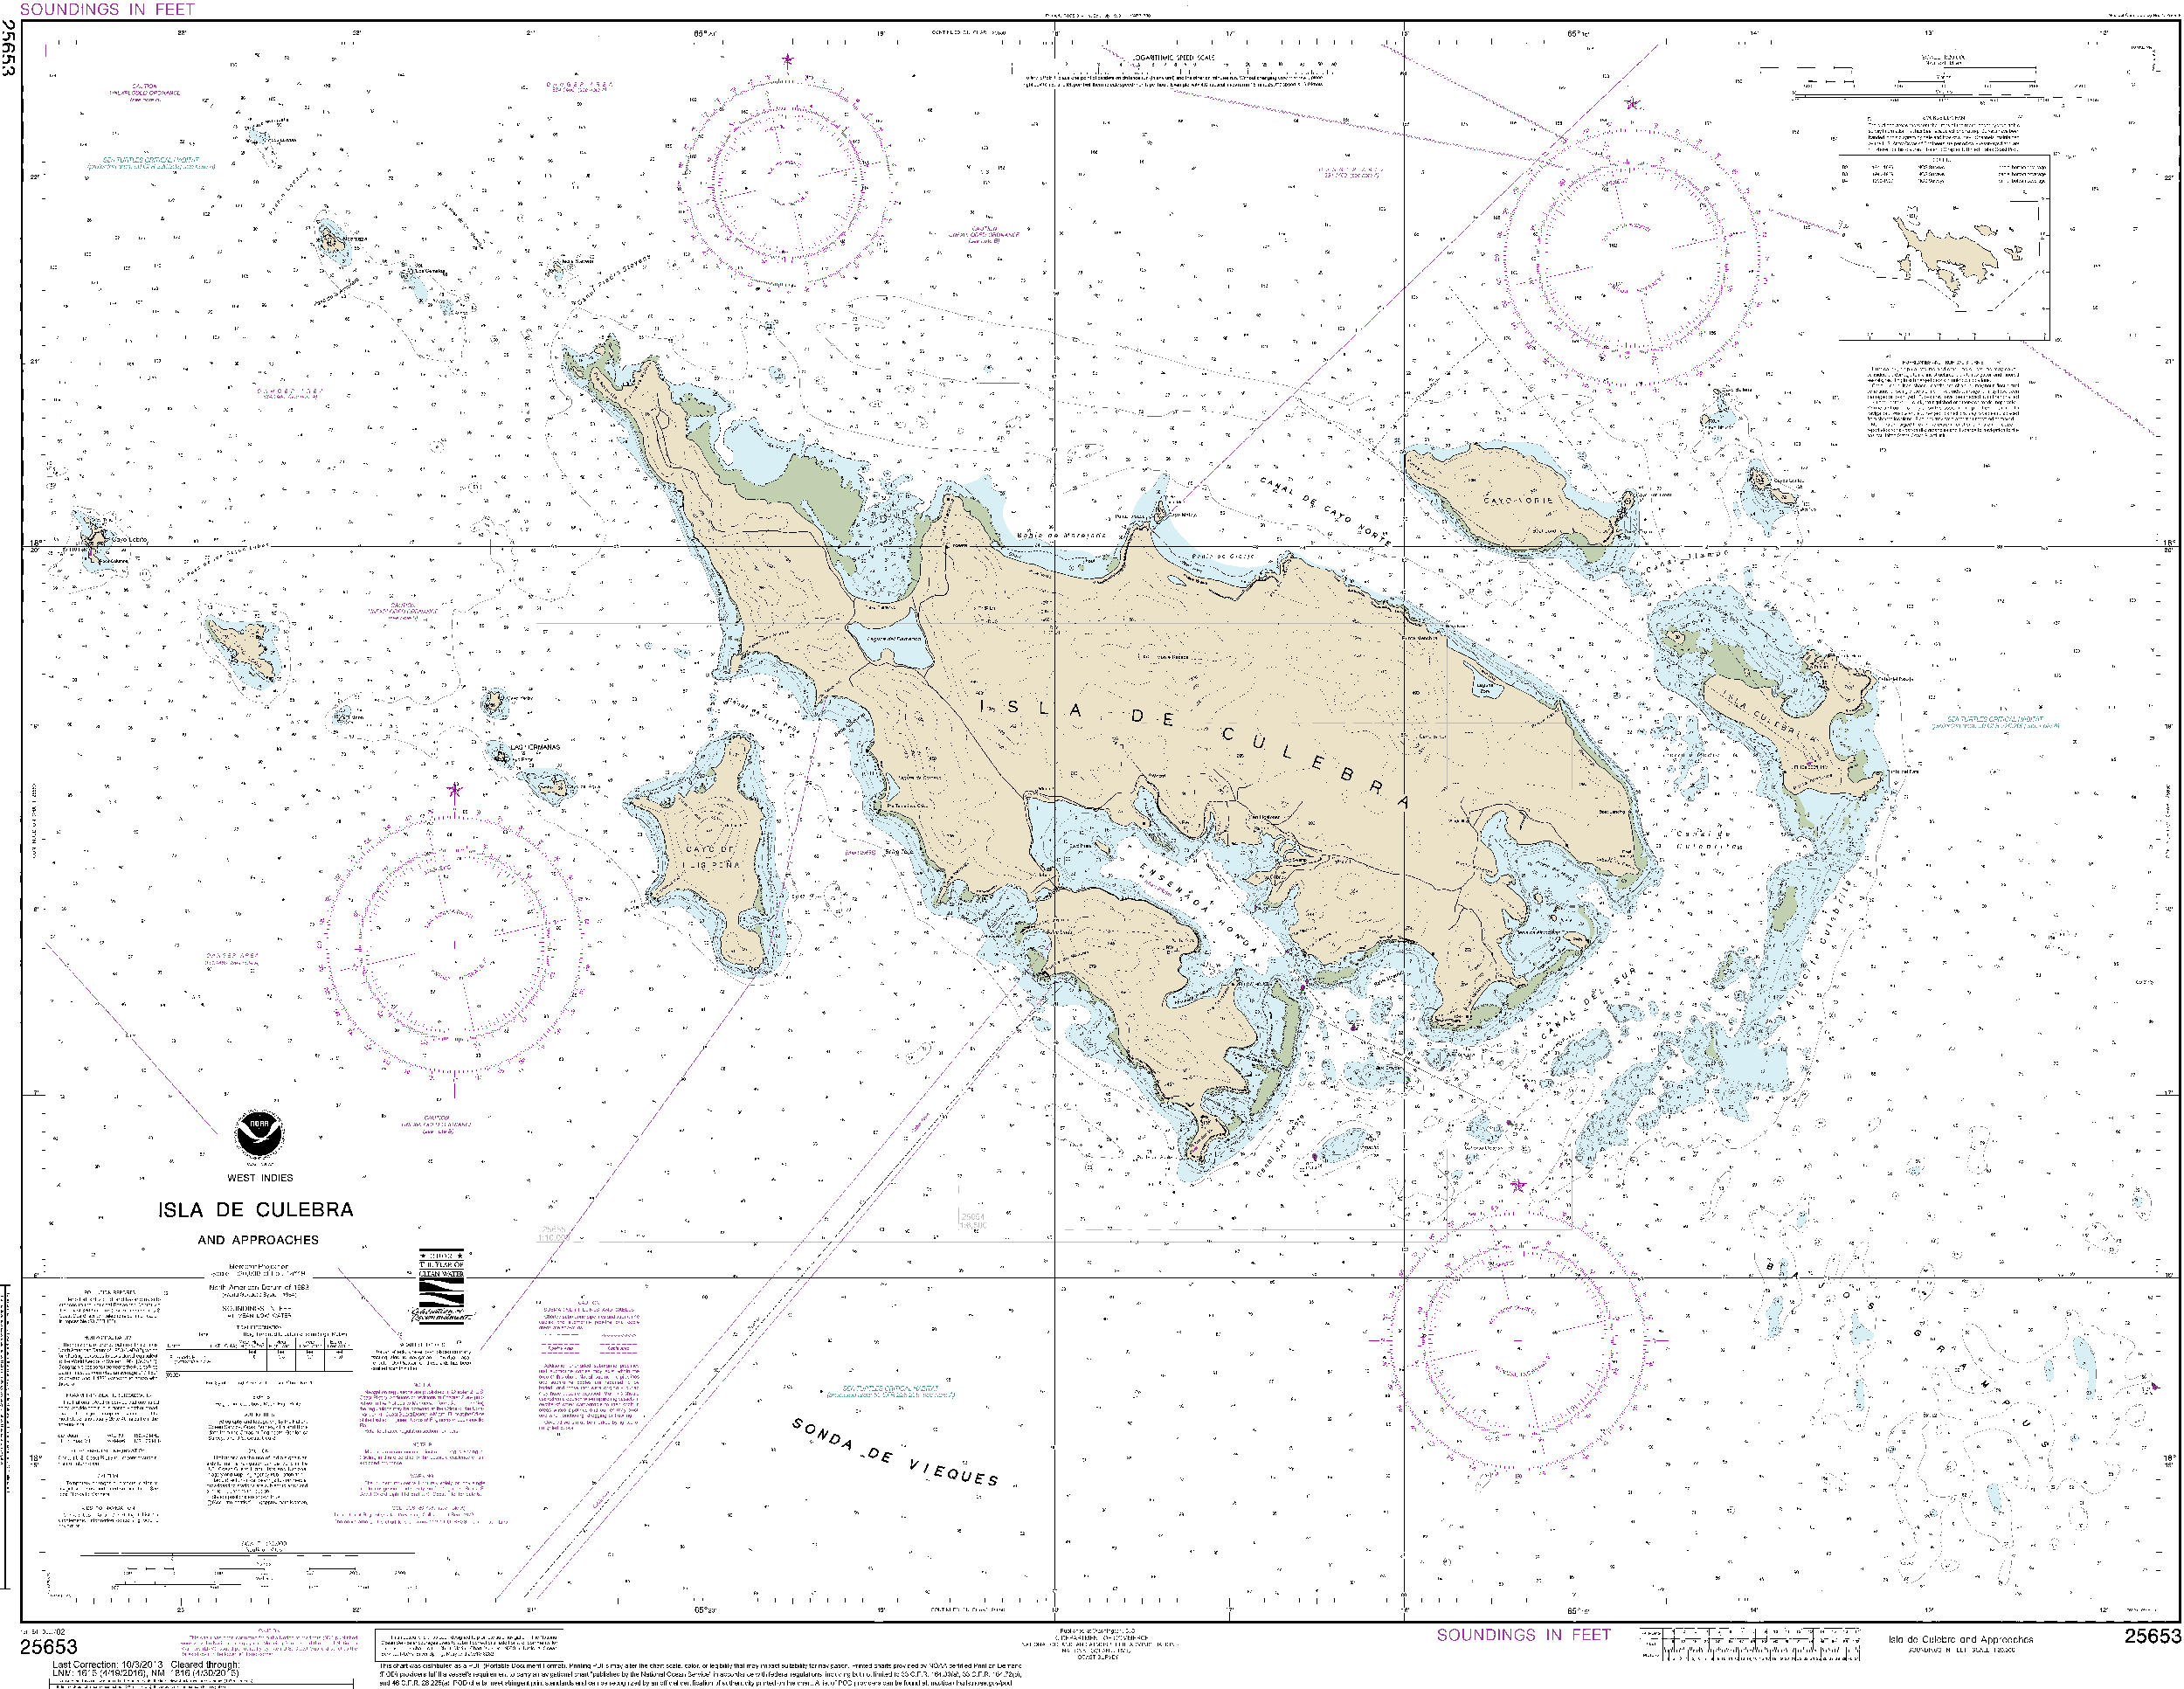 NOAA Nautical Chart 25653: Isla de Culebra and Approaches